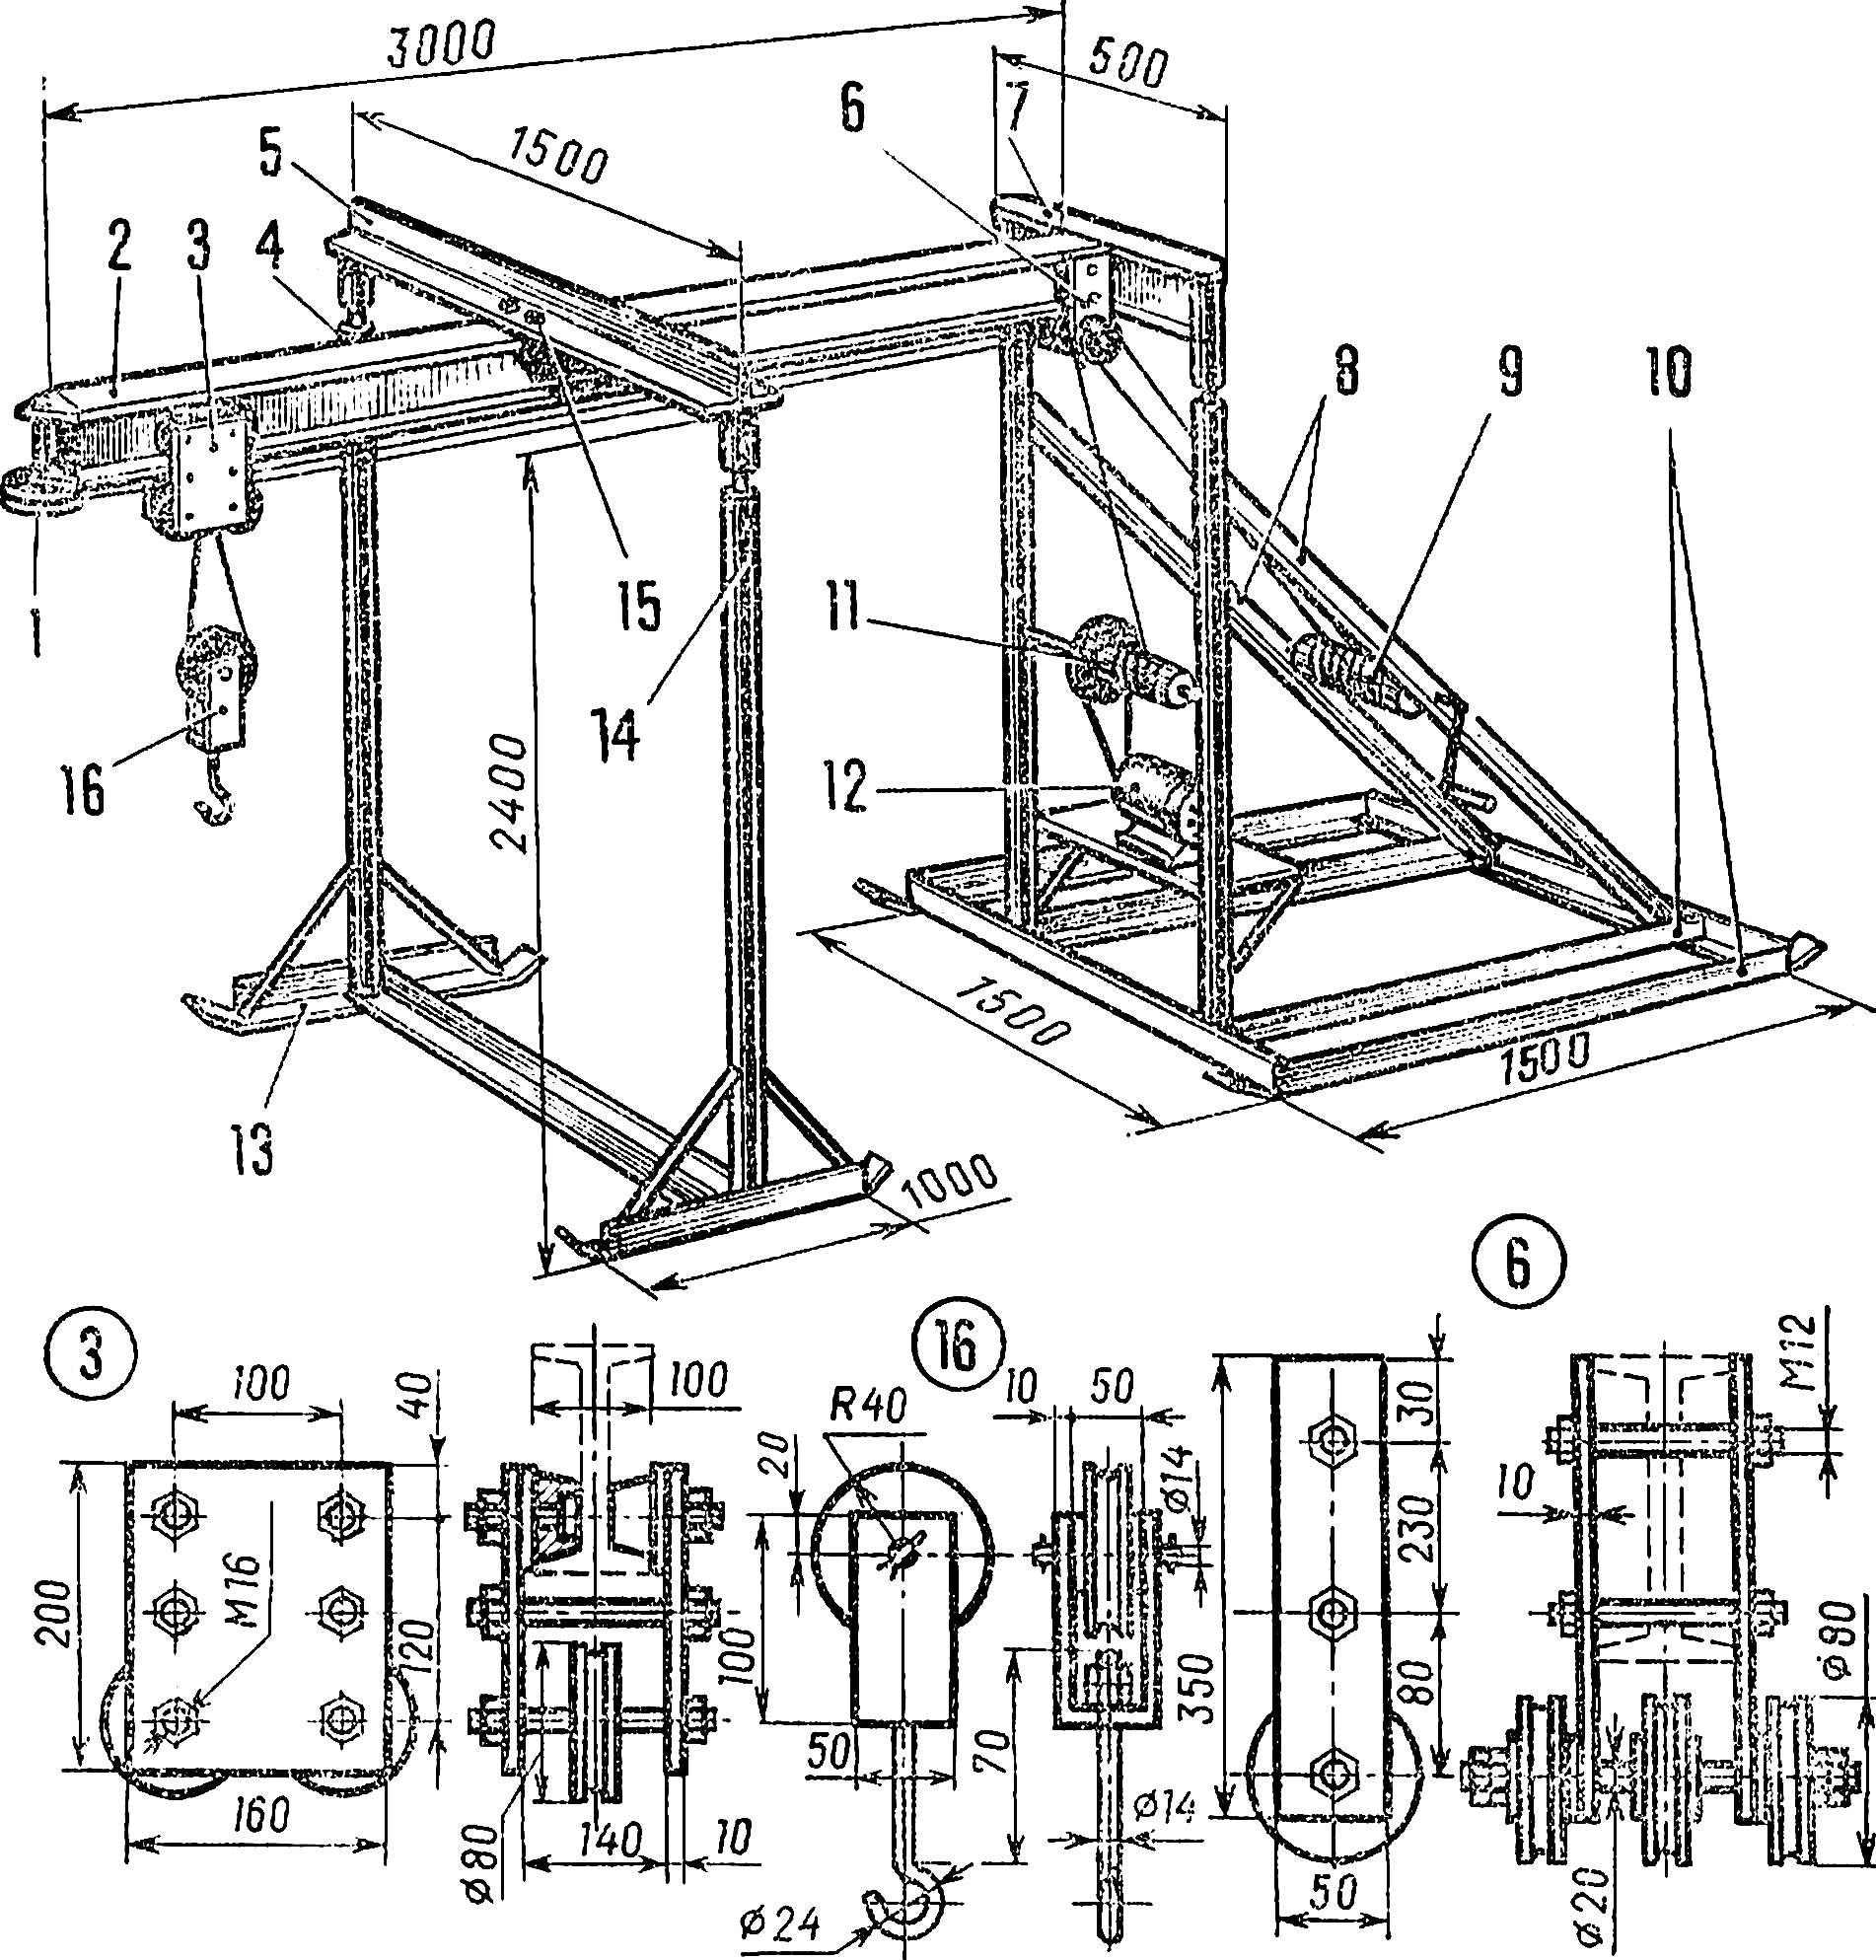 Fig. 1. Lightweight construction crane.